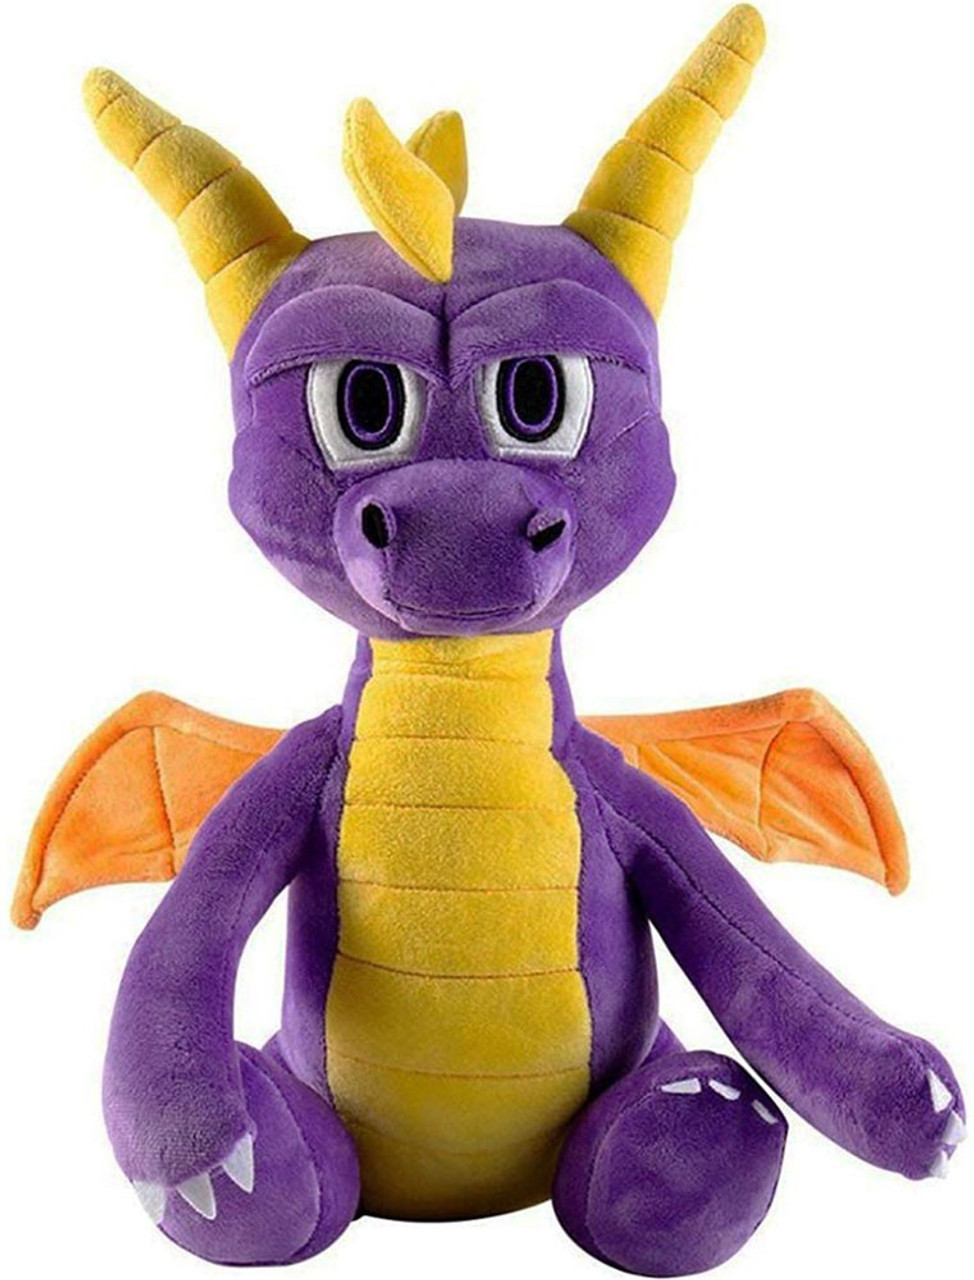 Spyro The Dragon Phunny Spyro The Dragon 16 Plush Hugme Vibrates Kidrobot Toywiz - handmade plush roblox guest toy with removable hat